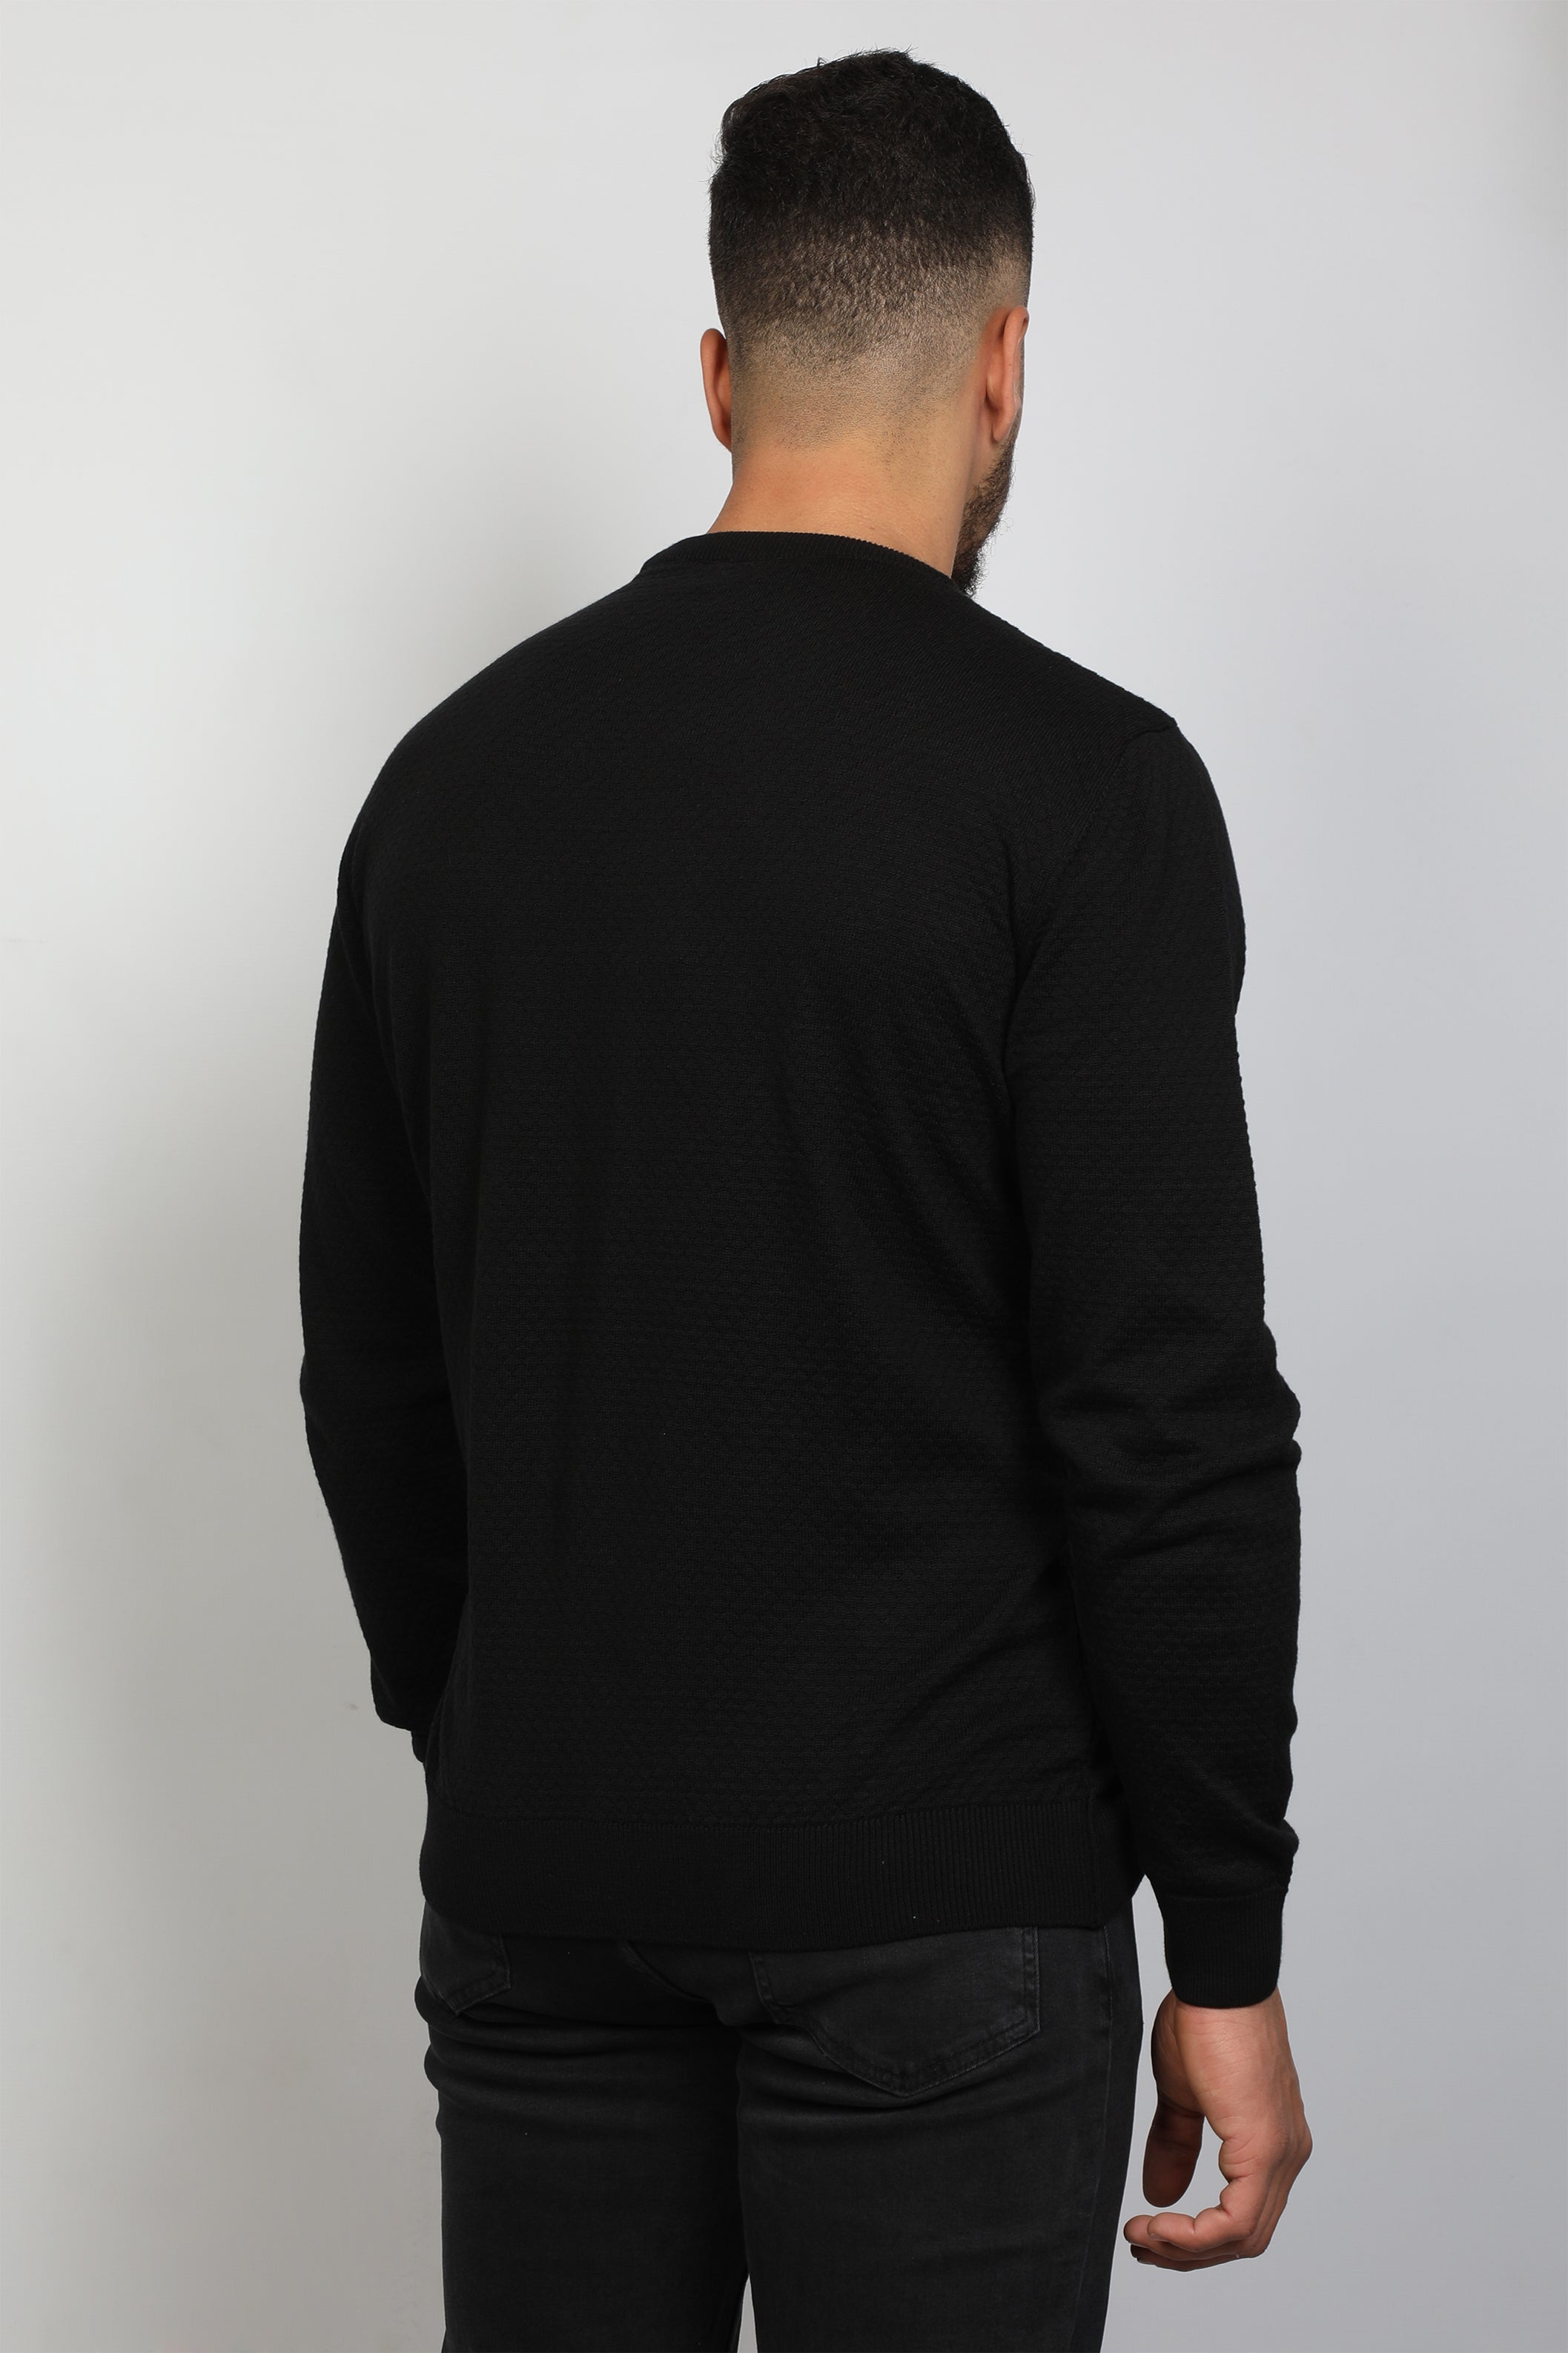 Men Left Strip Designed Black Sweater